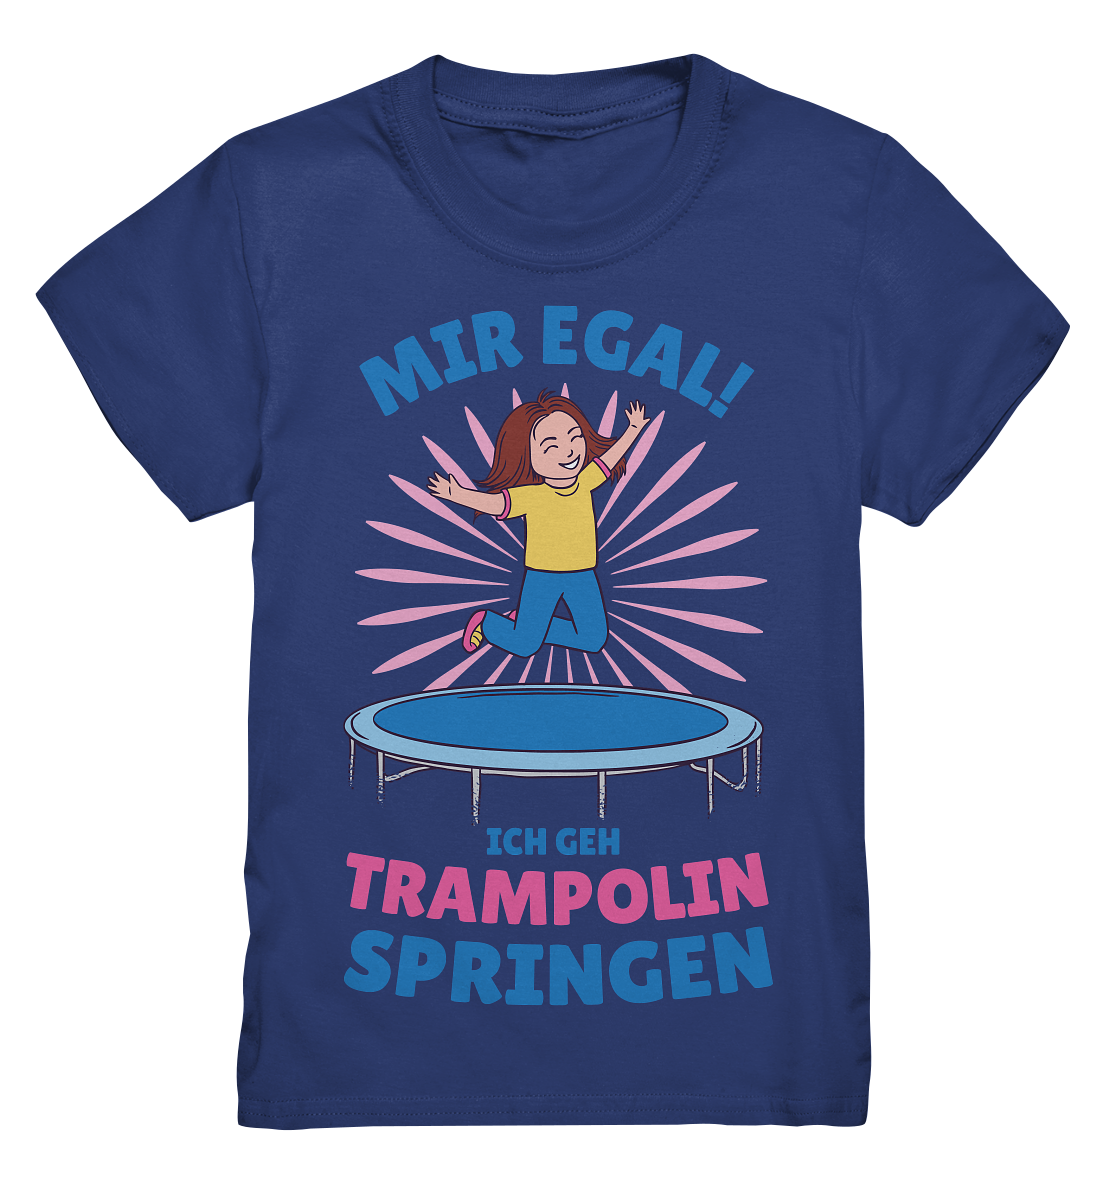 Mir egal ich geh Trampolin springen  - Kids Premium Shirt